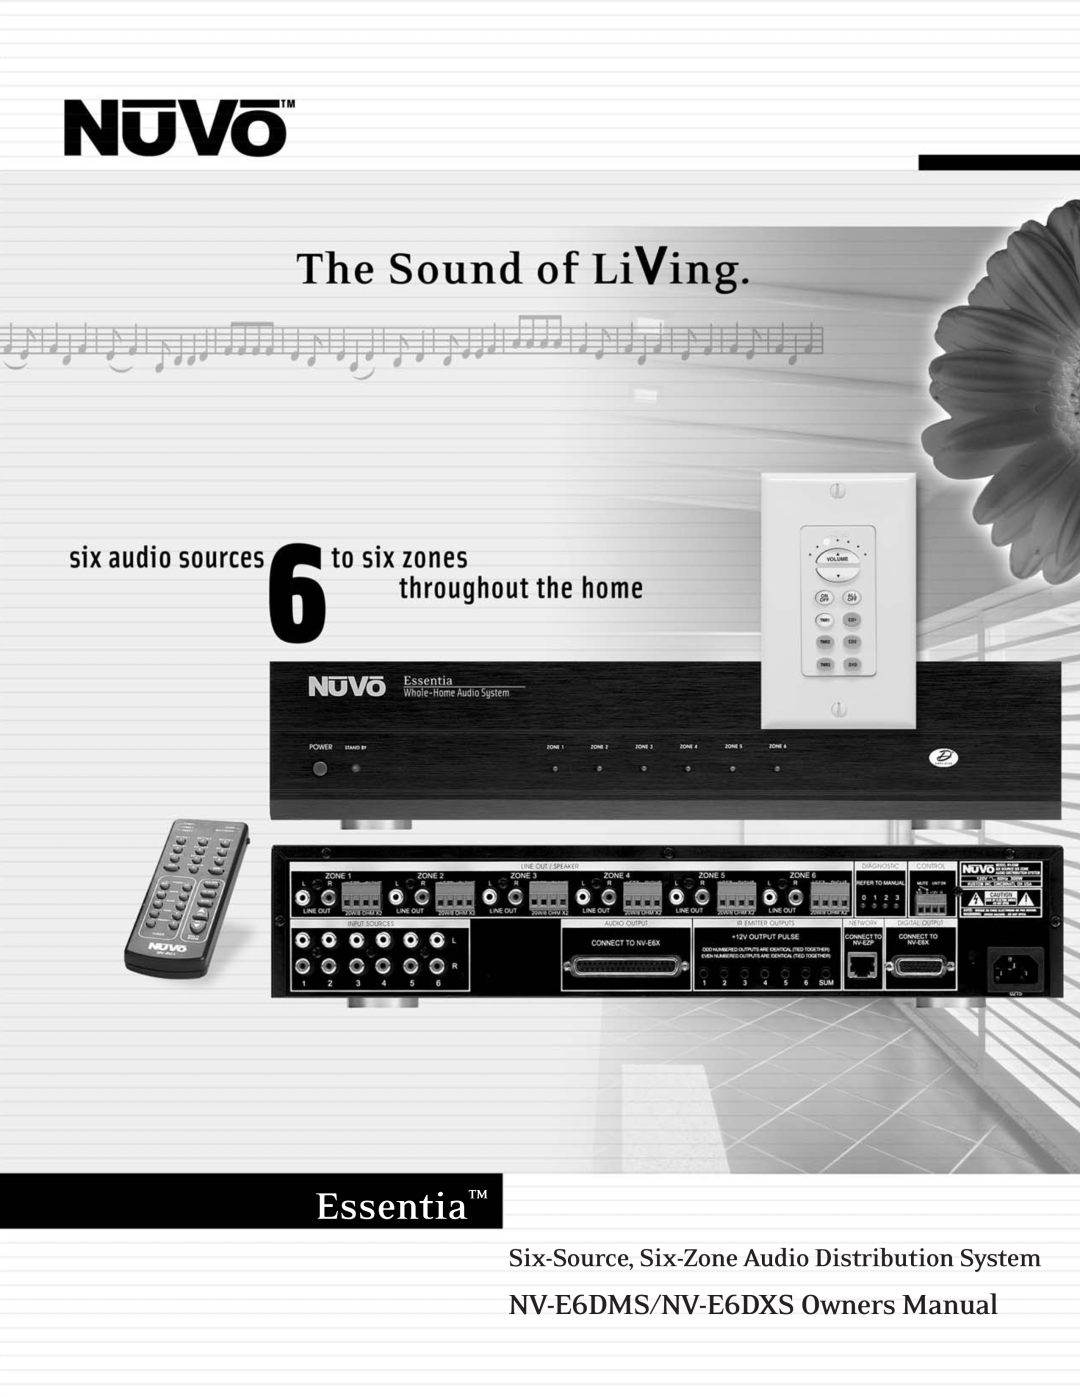 Nuvo NV-E6DMS, NV-E6DXS owner manual Six-Source, Six-ZoneAudio Distribution System, Essentia 